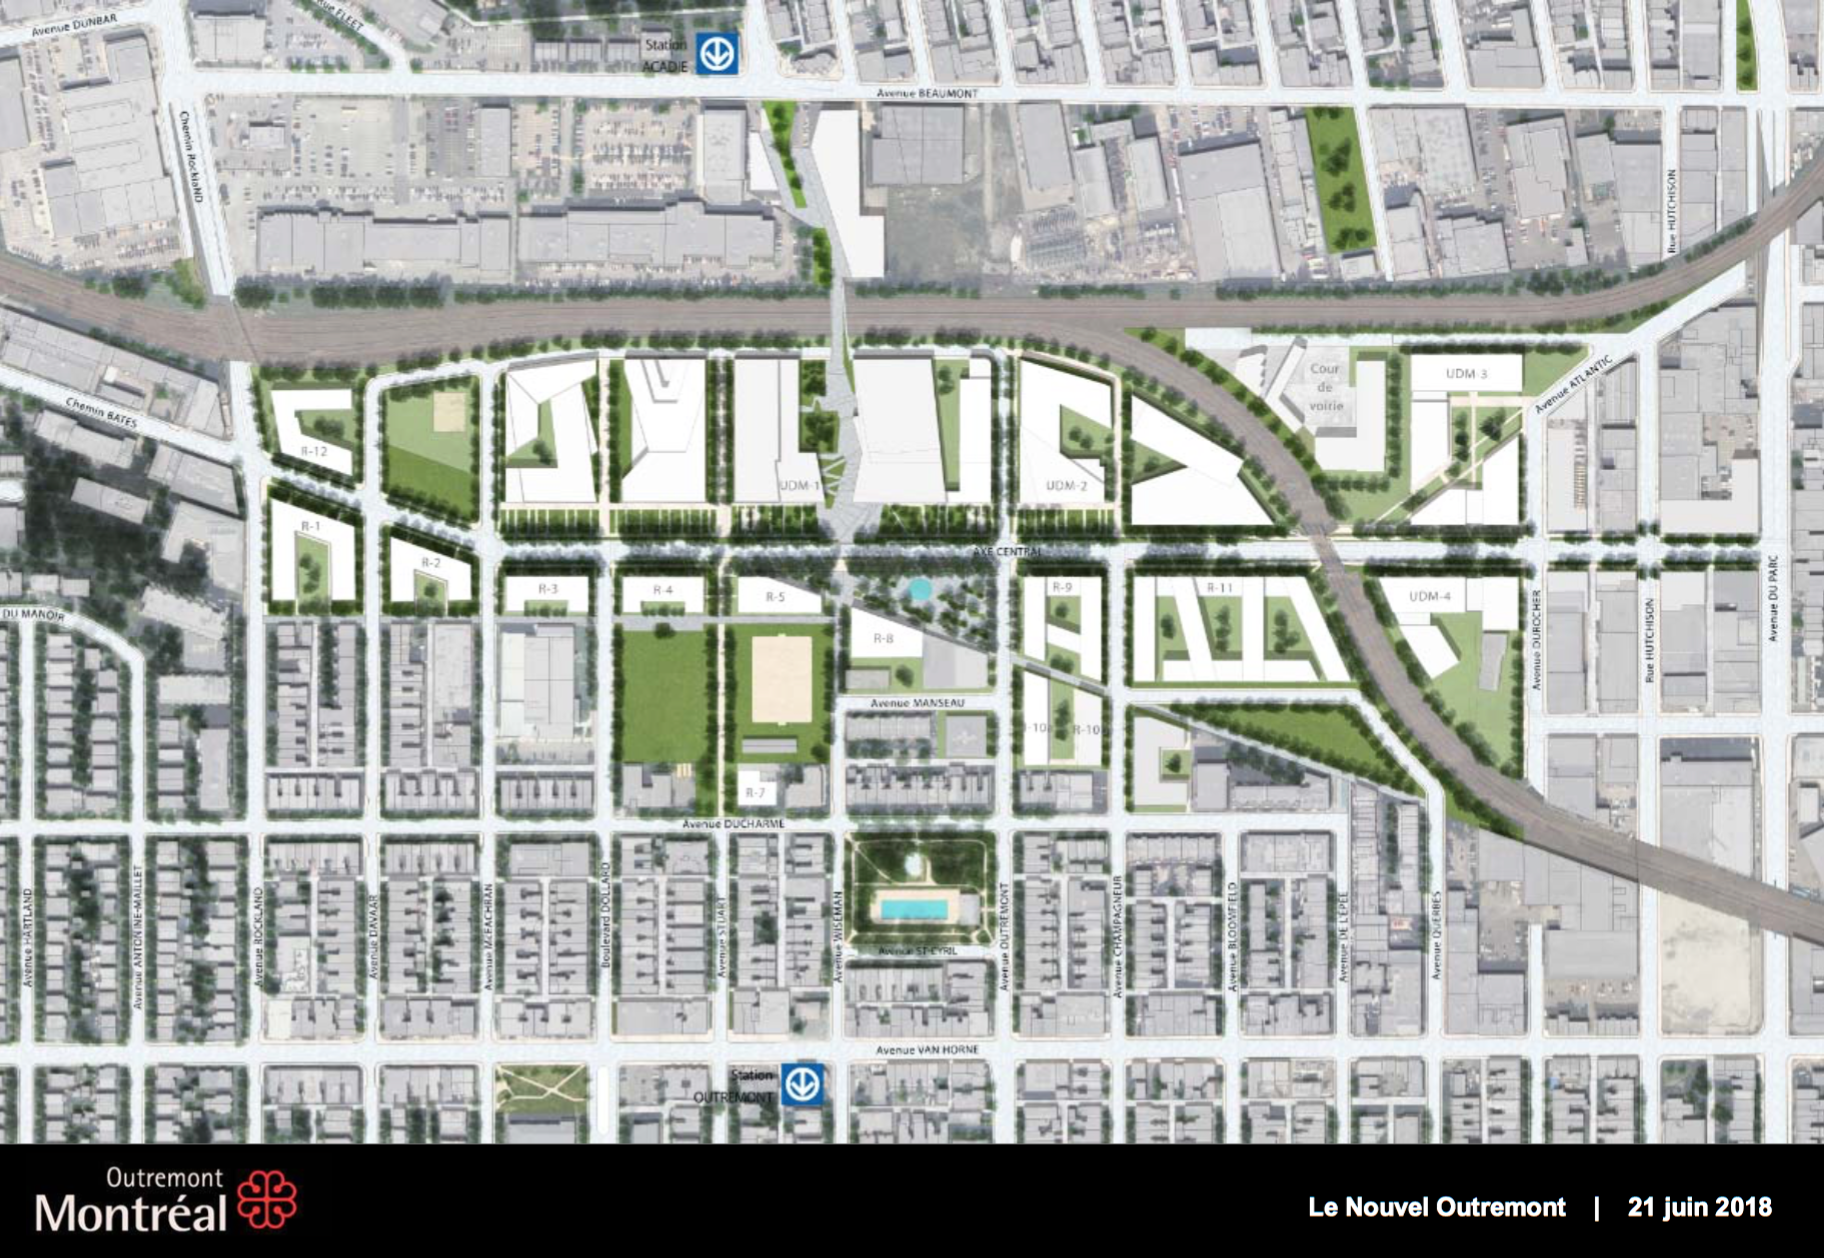  The plan for a brand new neighbourhood linking a number of currently dis-connected communities (Ville de Montréal). 